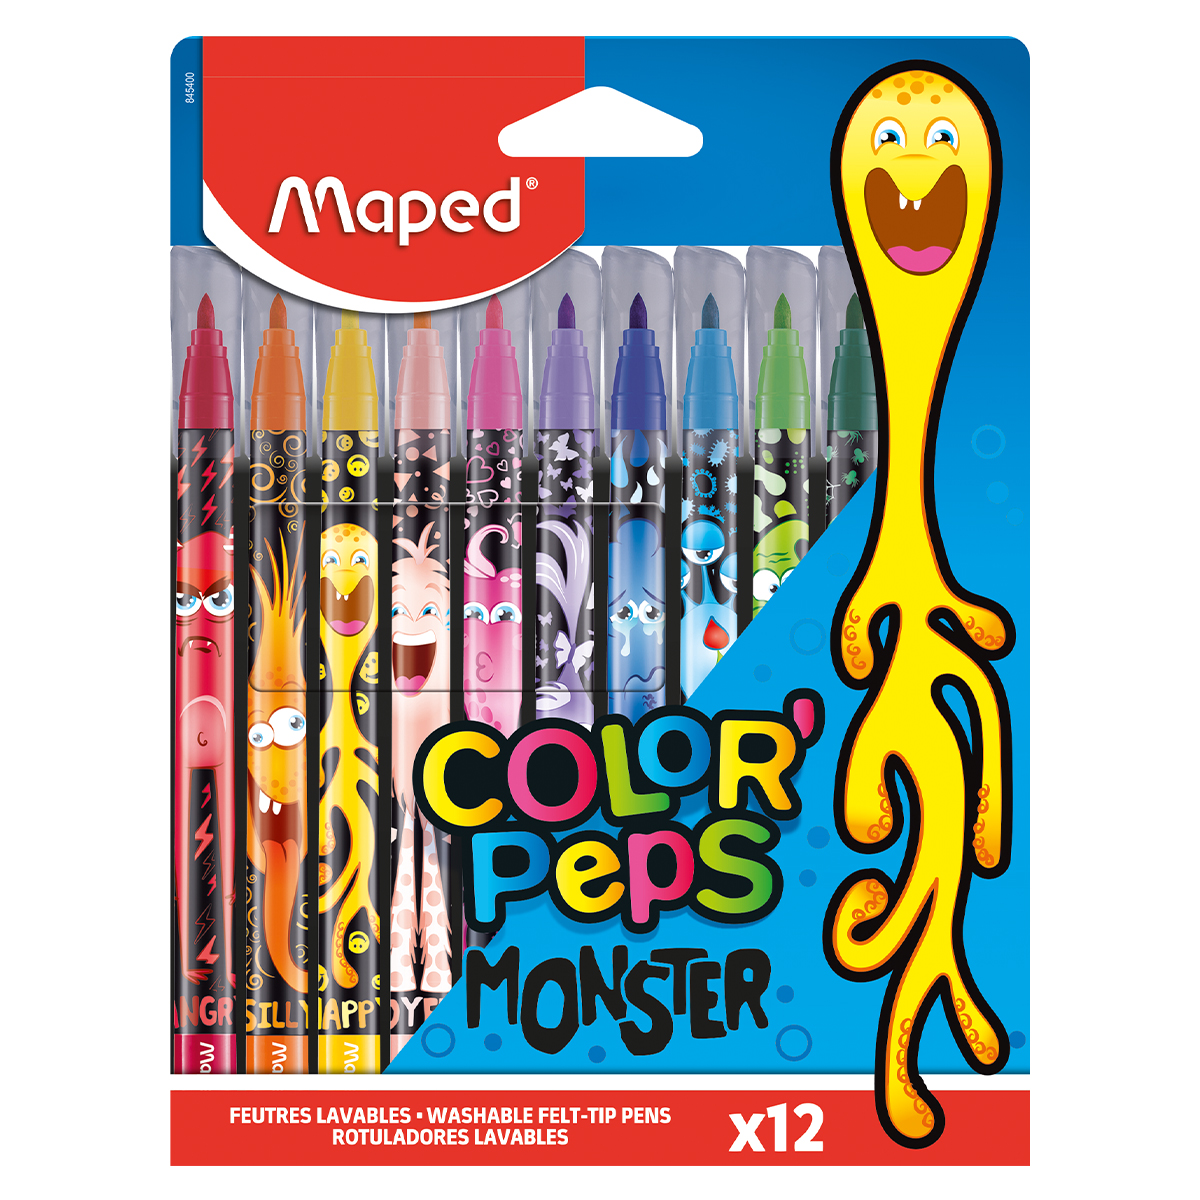 Maped Colorpeps Monster Felt Tip Pens Pack of 12